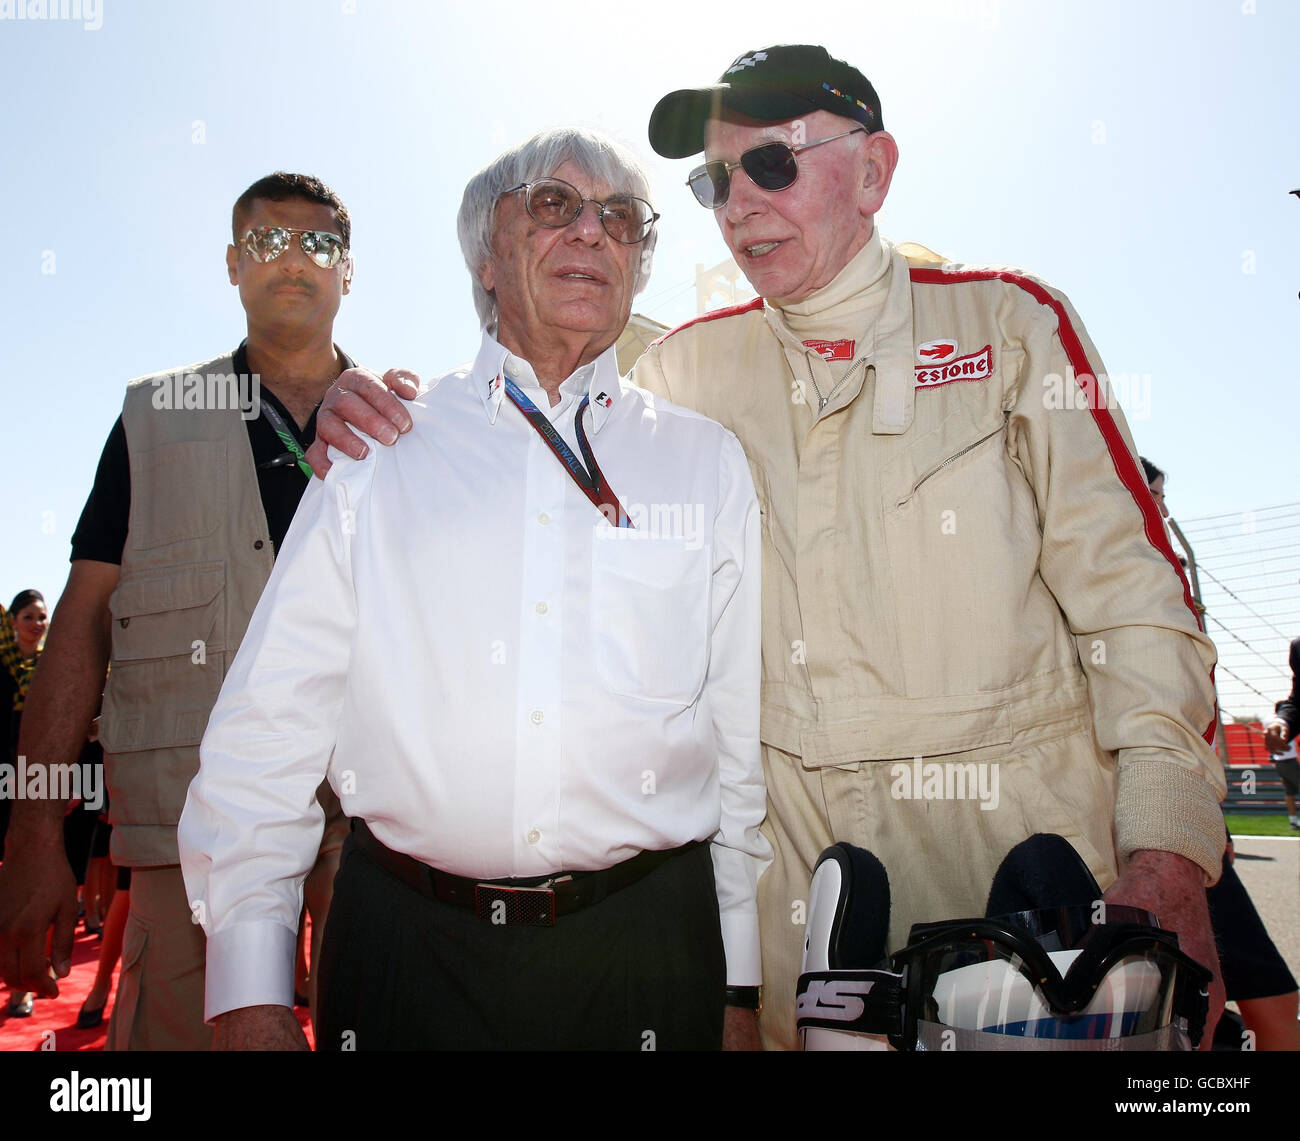 Bernie Ecclestone and John Surtess prior to the Gulf Air Bahrain Grand Prix at the Bahrain International Circuit in Sakhir, Bahrain. Stock Photo